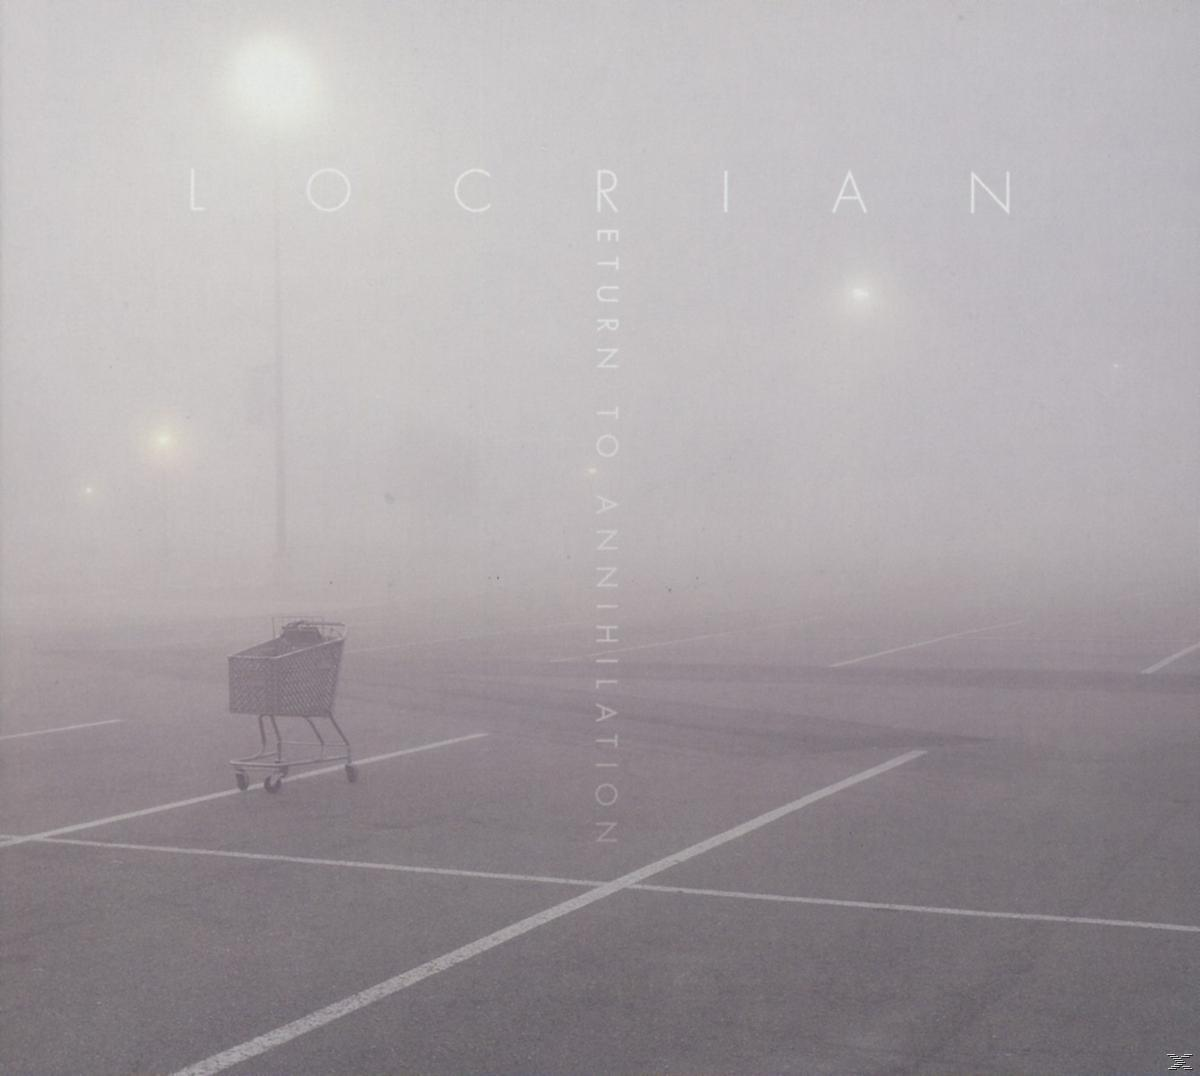 To - Annihilation Locrian - (CD) Return